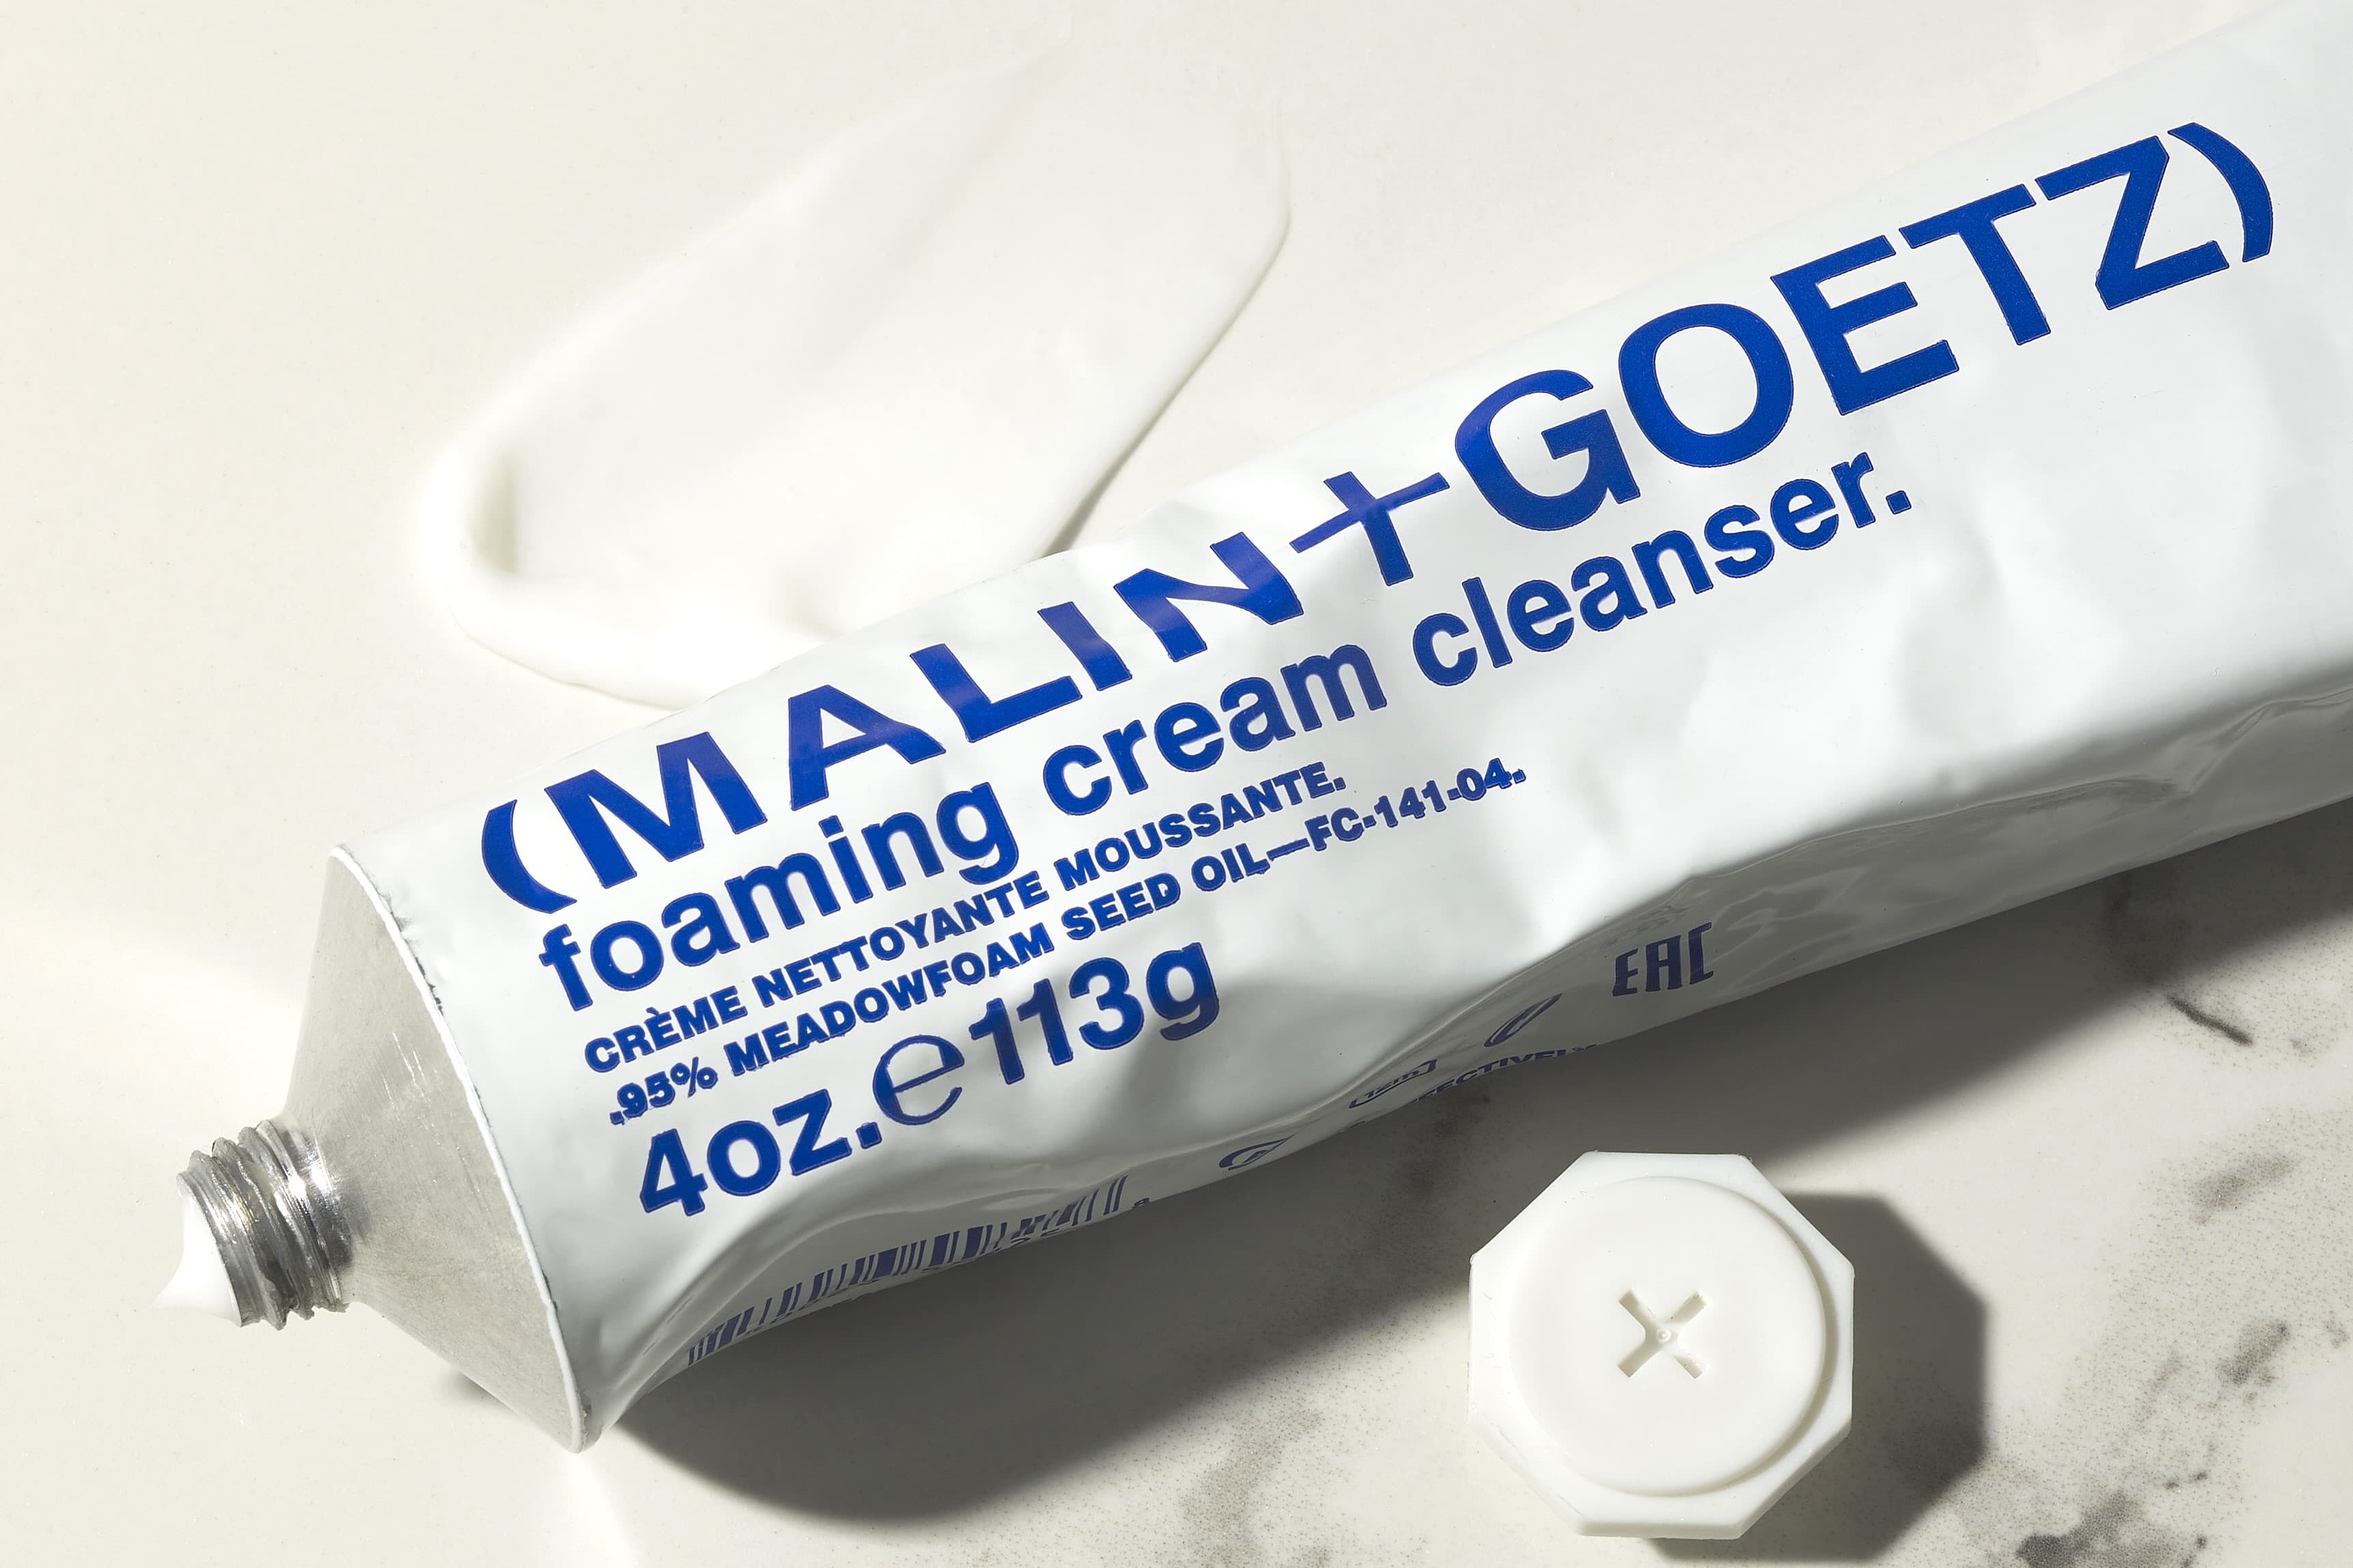 Malin + Goetz Foaming Cream Cleanser | Space NK